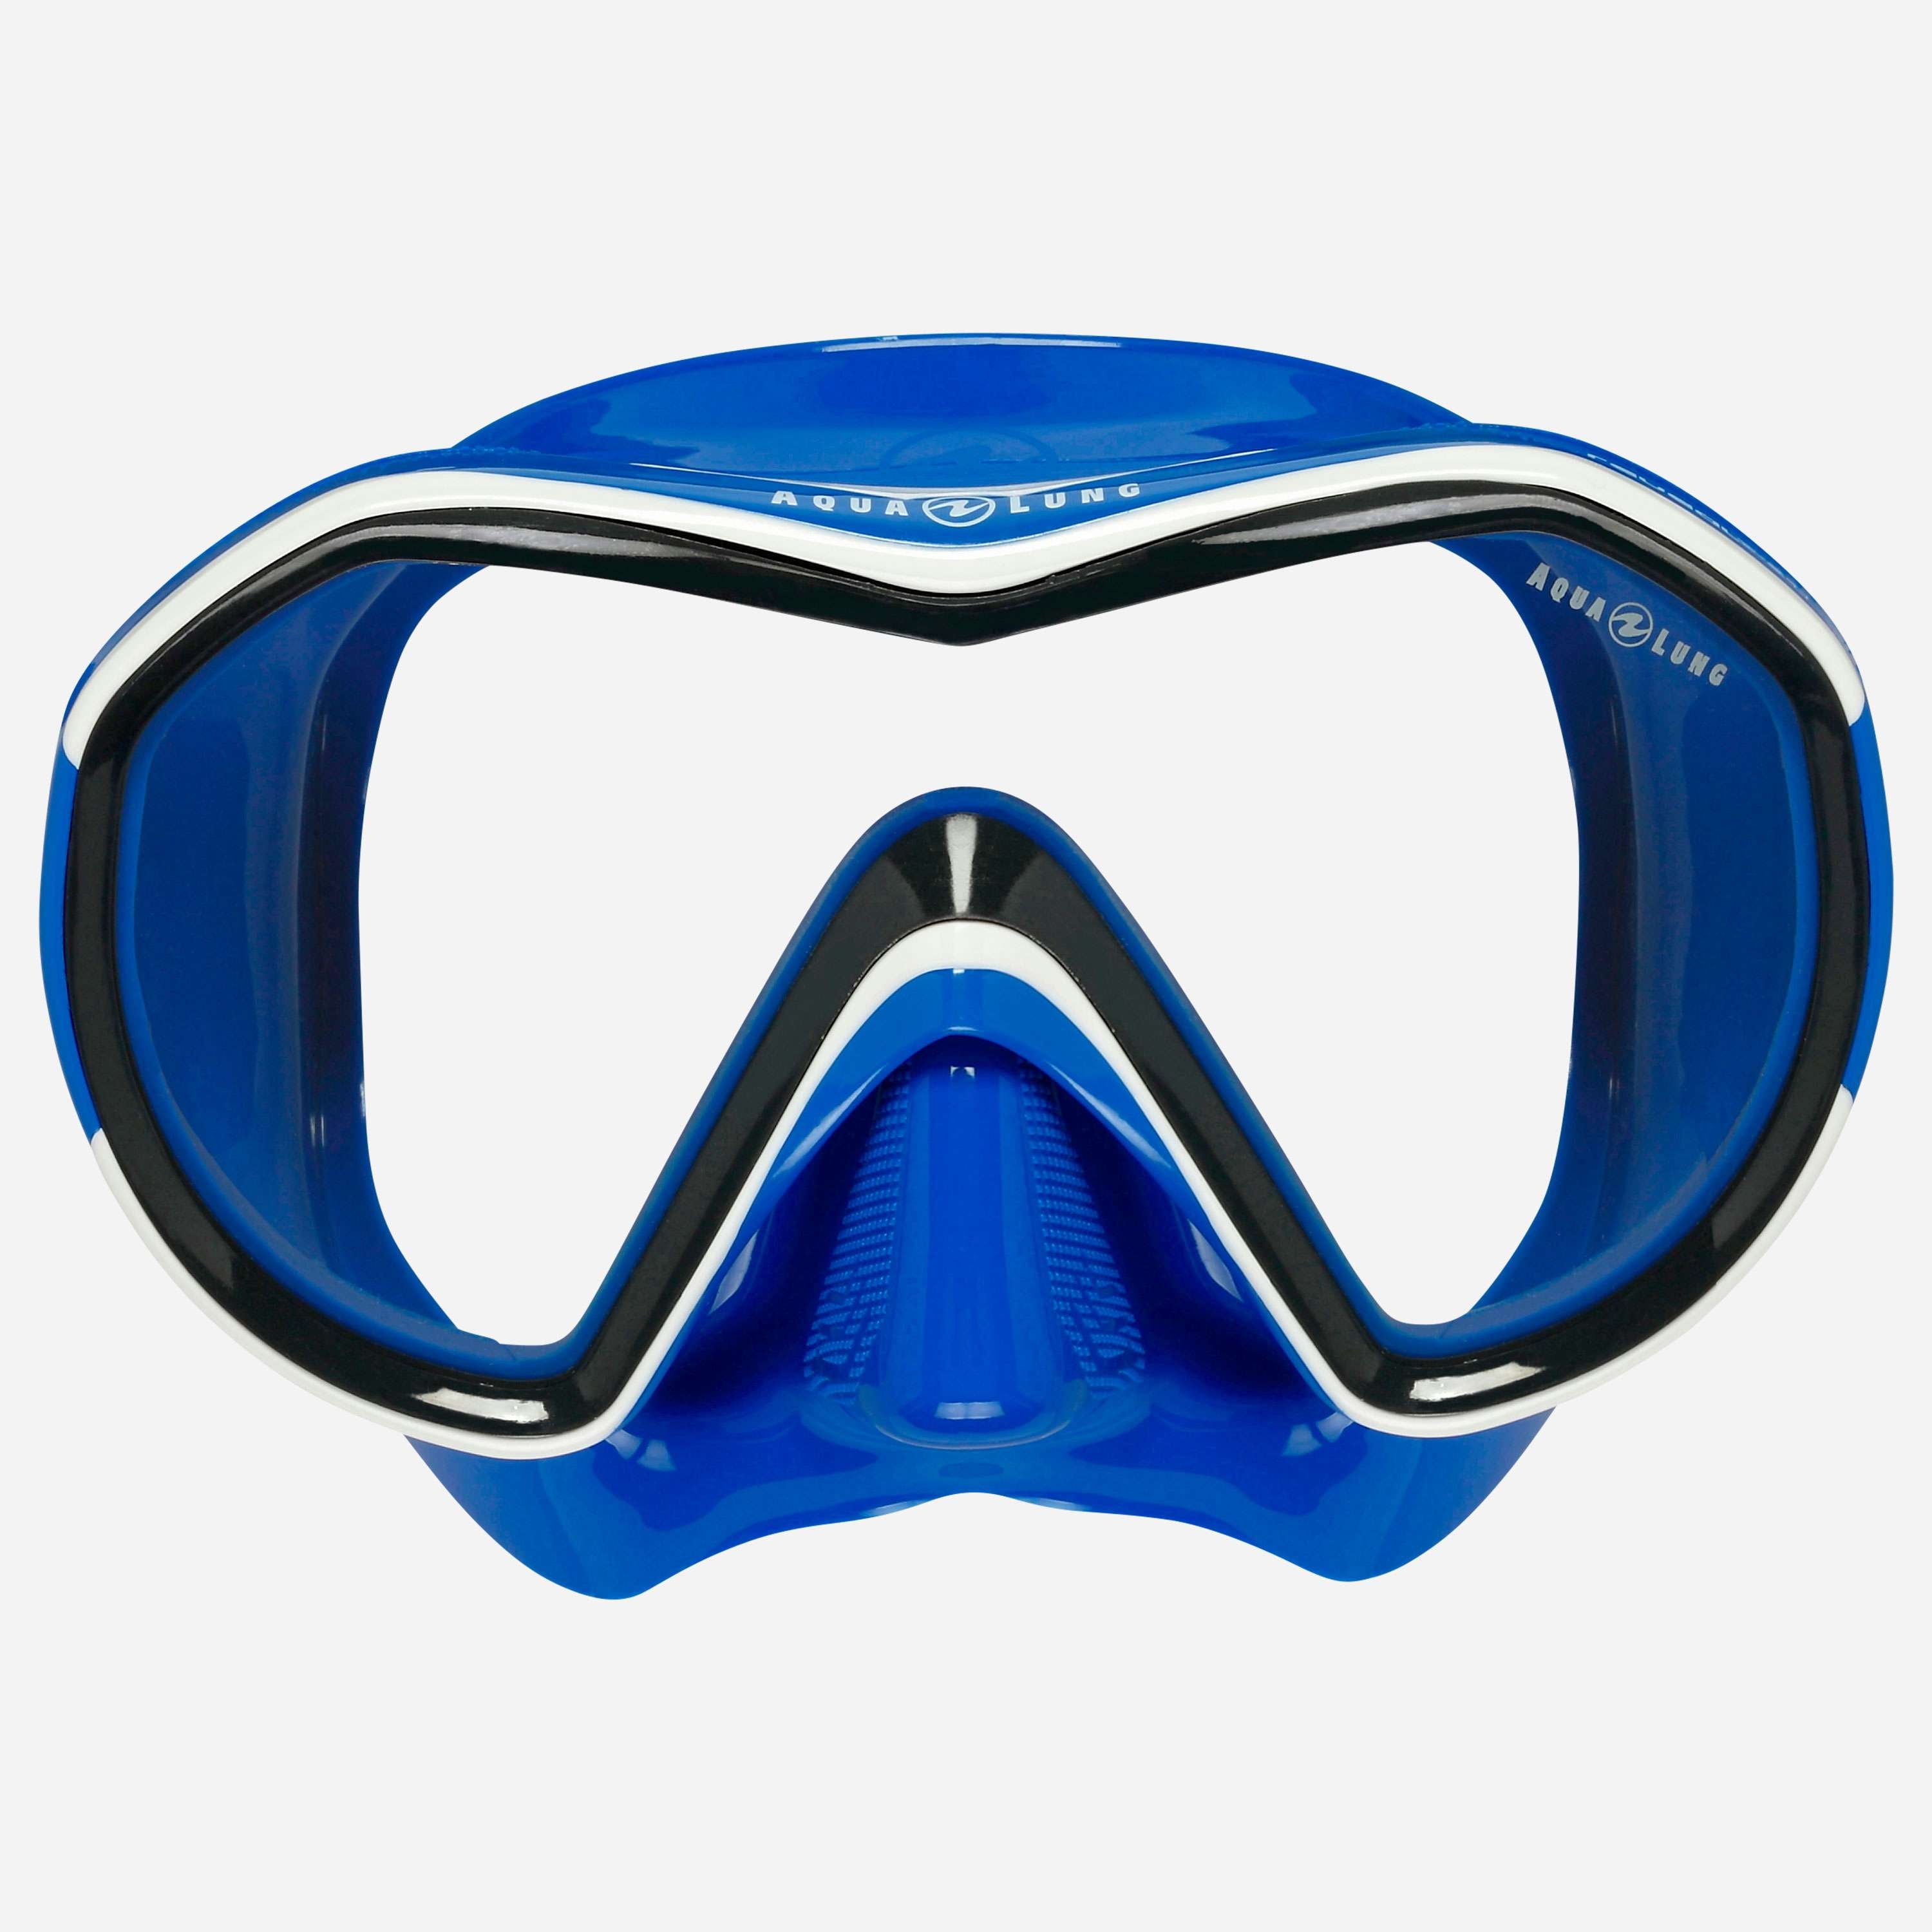 Reveal X1: Scuba Diving Mask